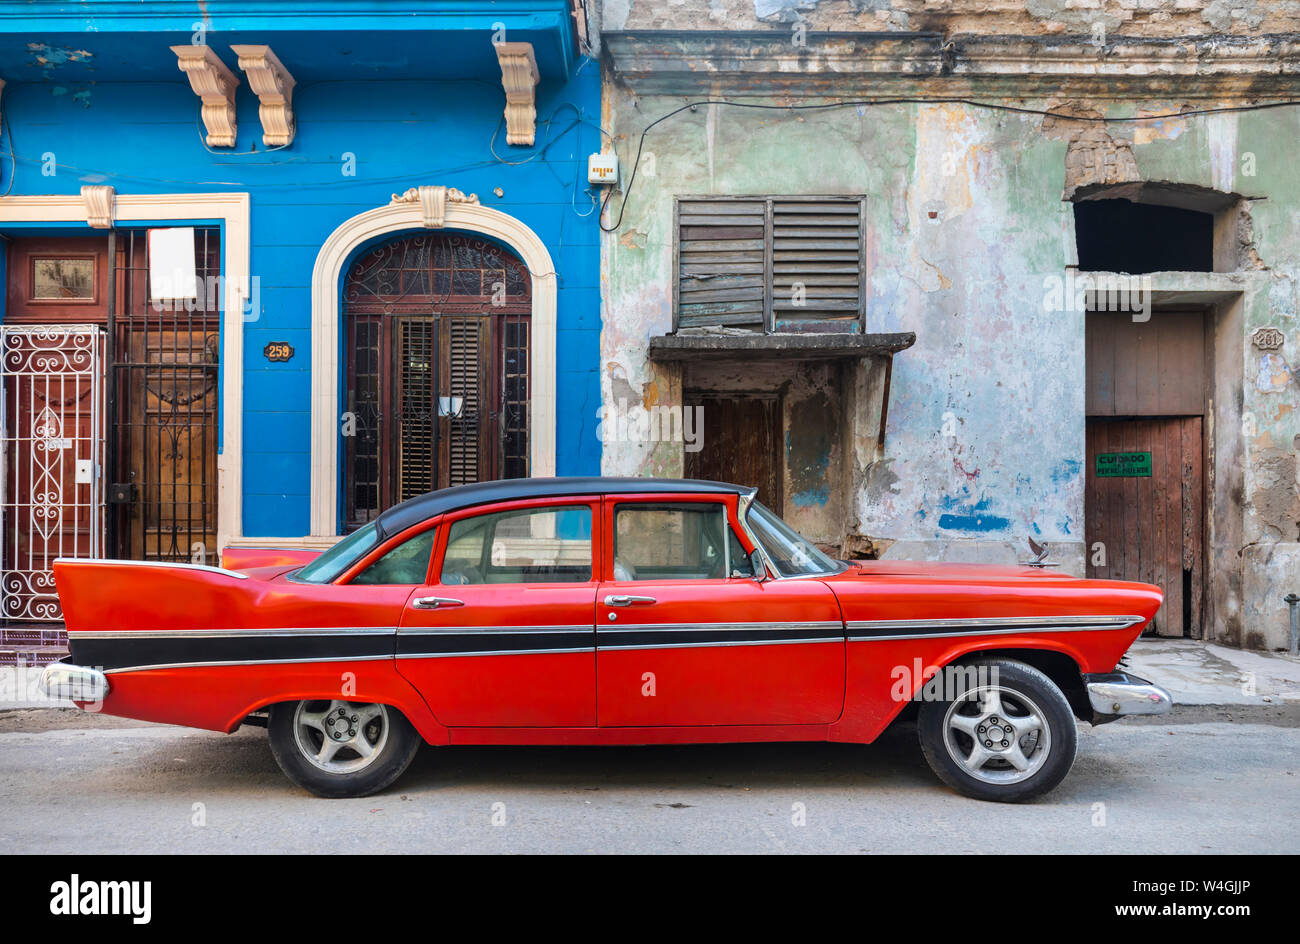 Parked red vintage car, Havana, Cuba Stock Photo